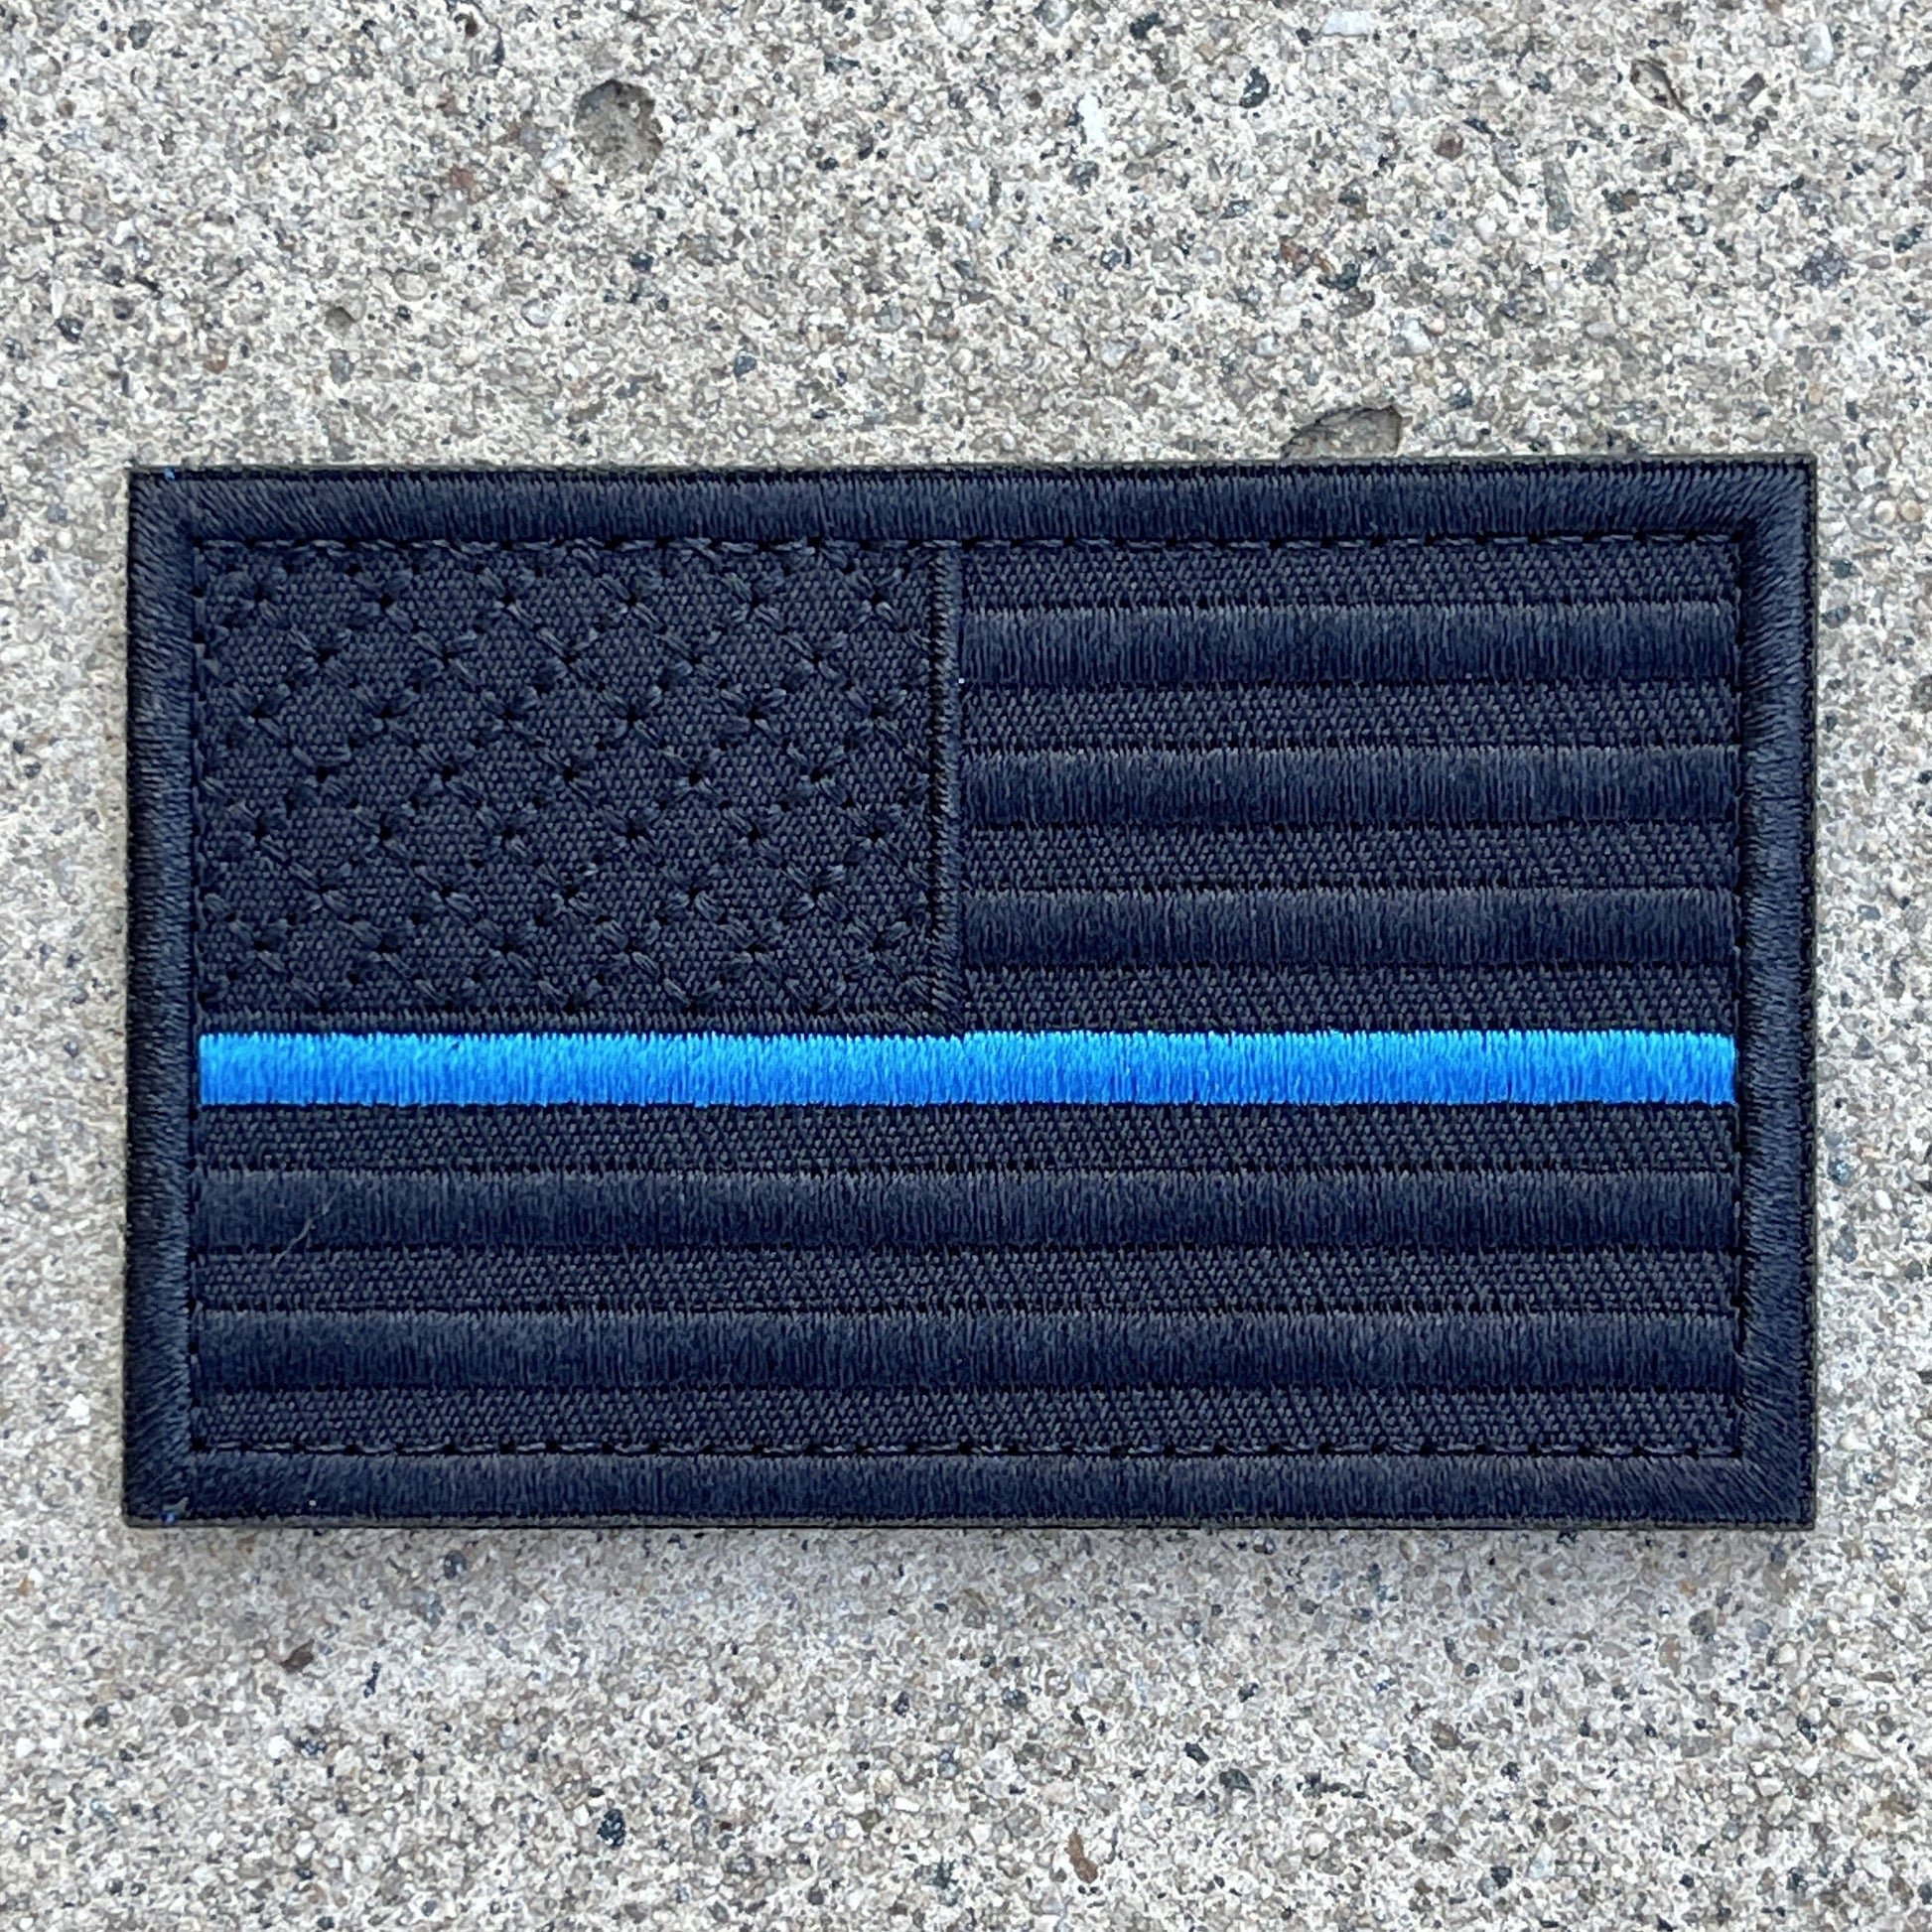 Thin Blue Line Flag Velcro Patch - Black Patches Blue Life Apparel 